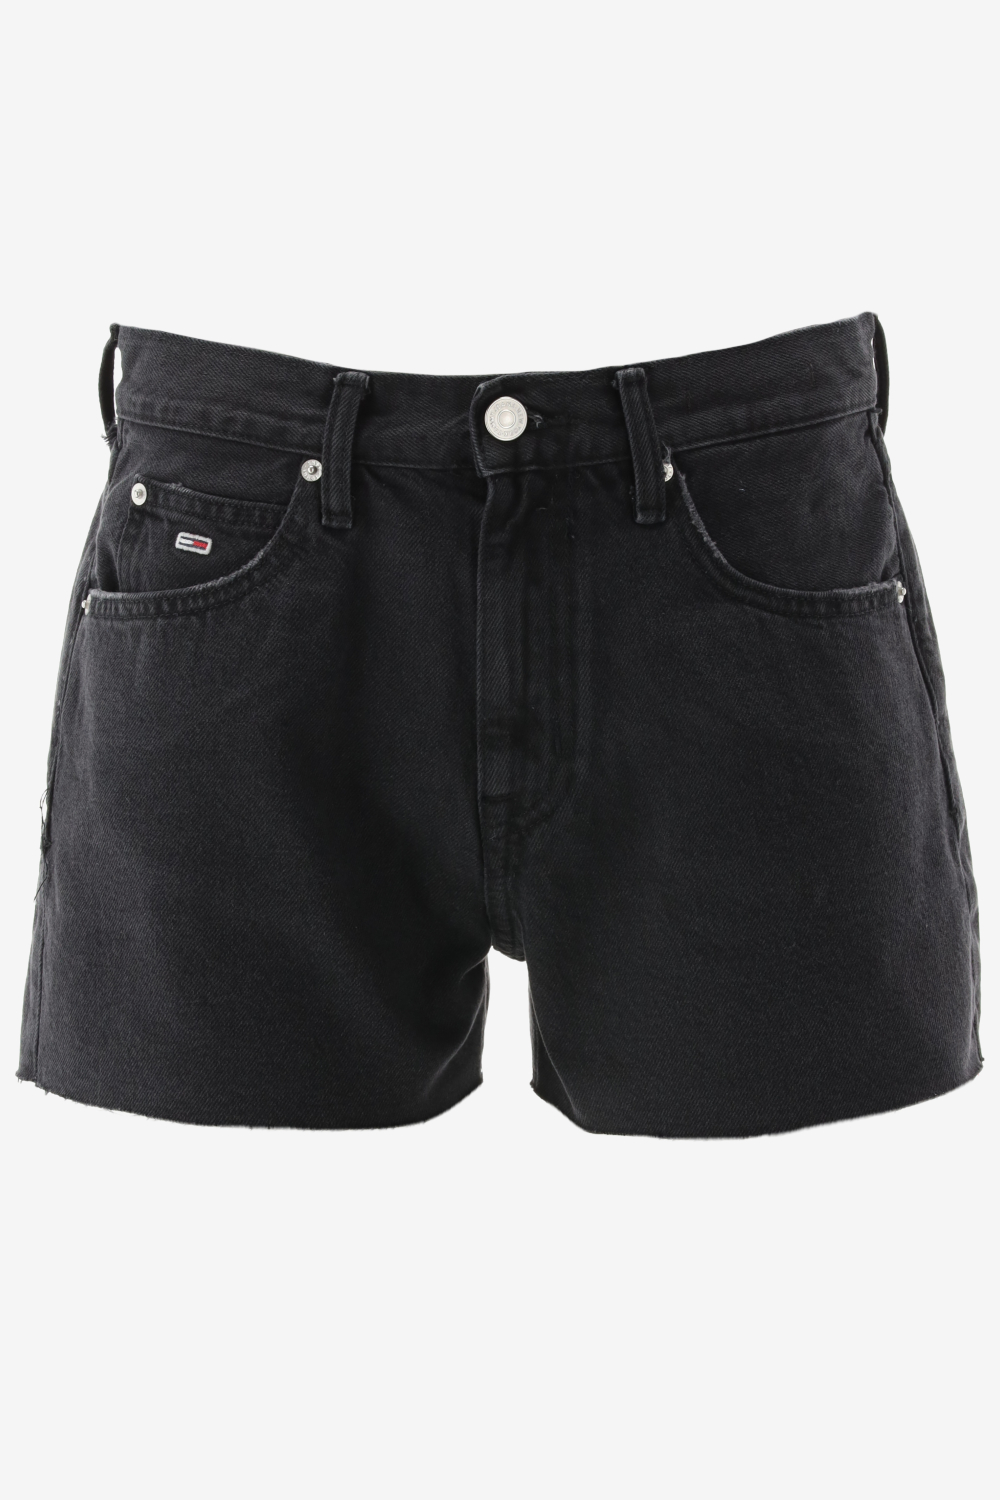 Tommy Jeans Hot Pant Short Bg0085 Broeken & Jumpsuits Dames - Jeans - Broekpak - Zwart - Maat 26